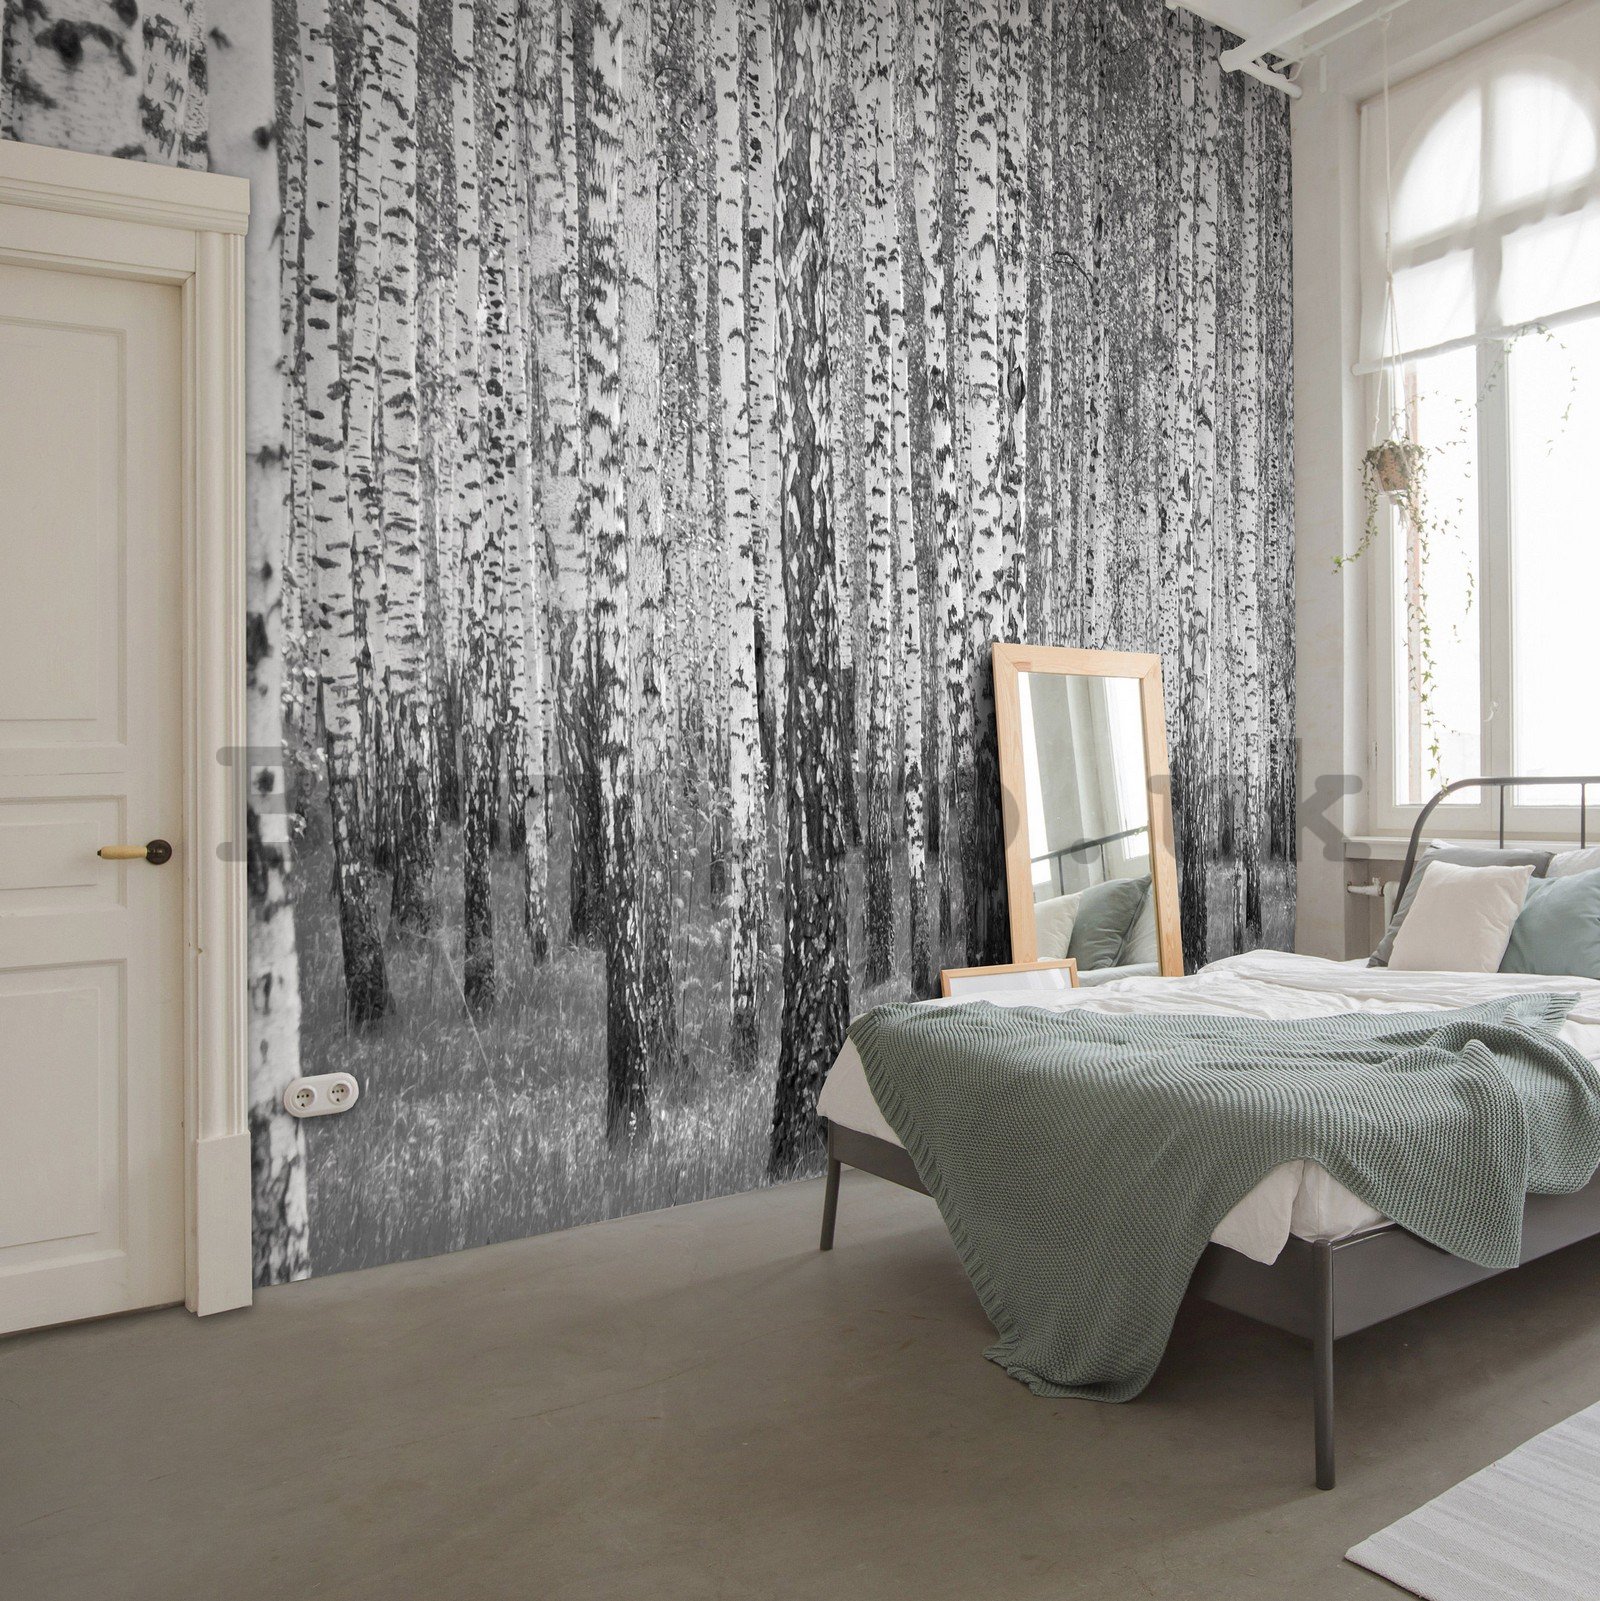 Wall mural vlies: Black and white birch trees - 254x184 cm